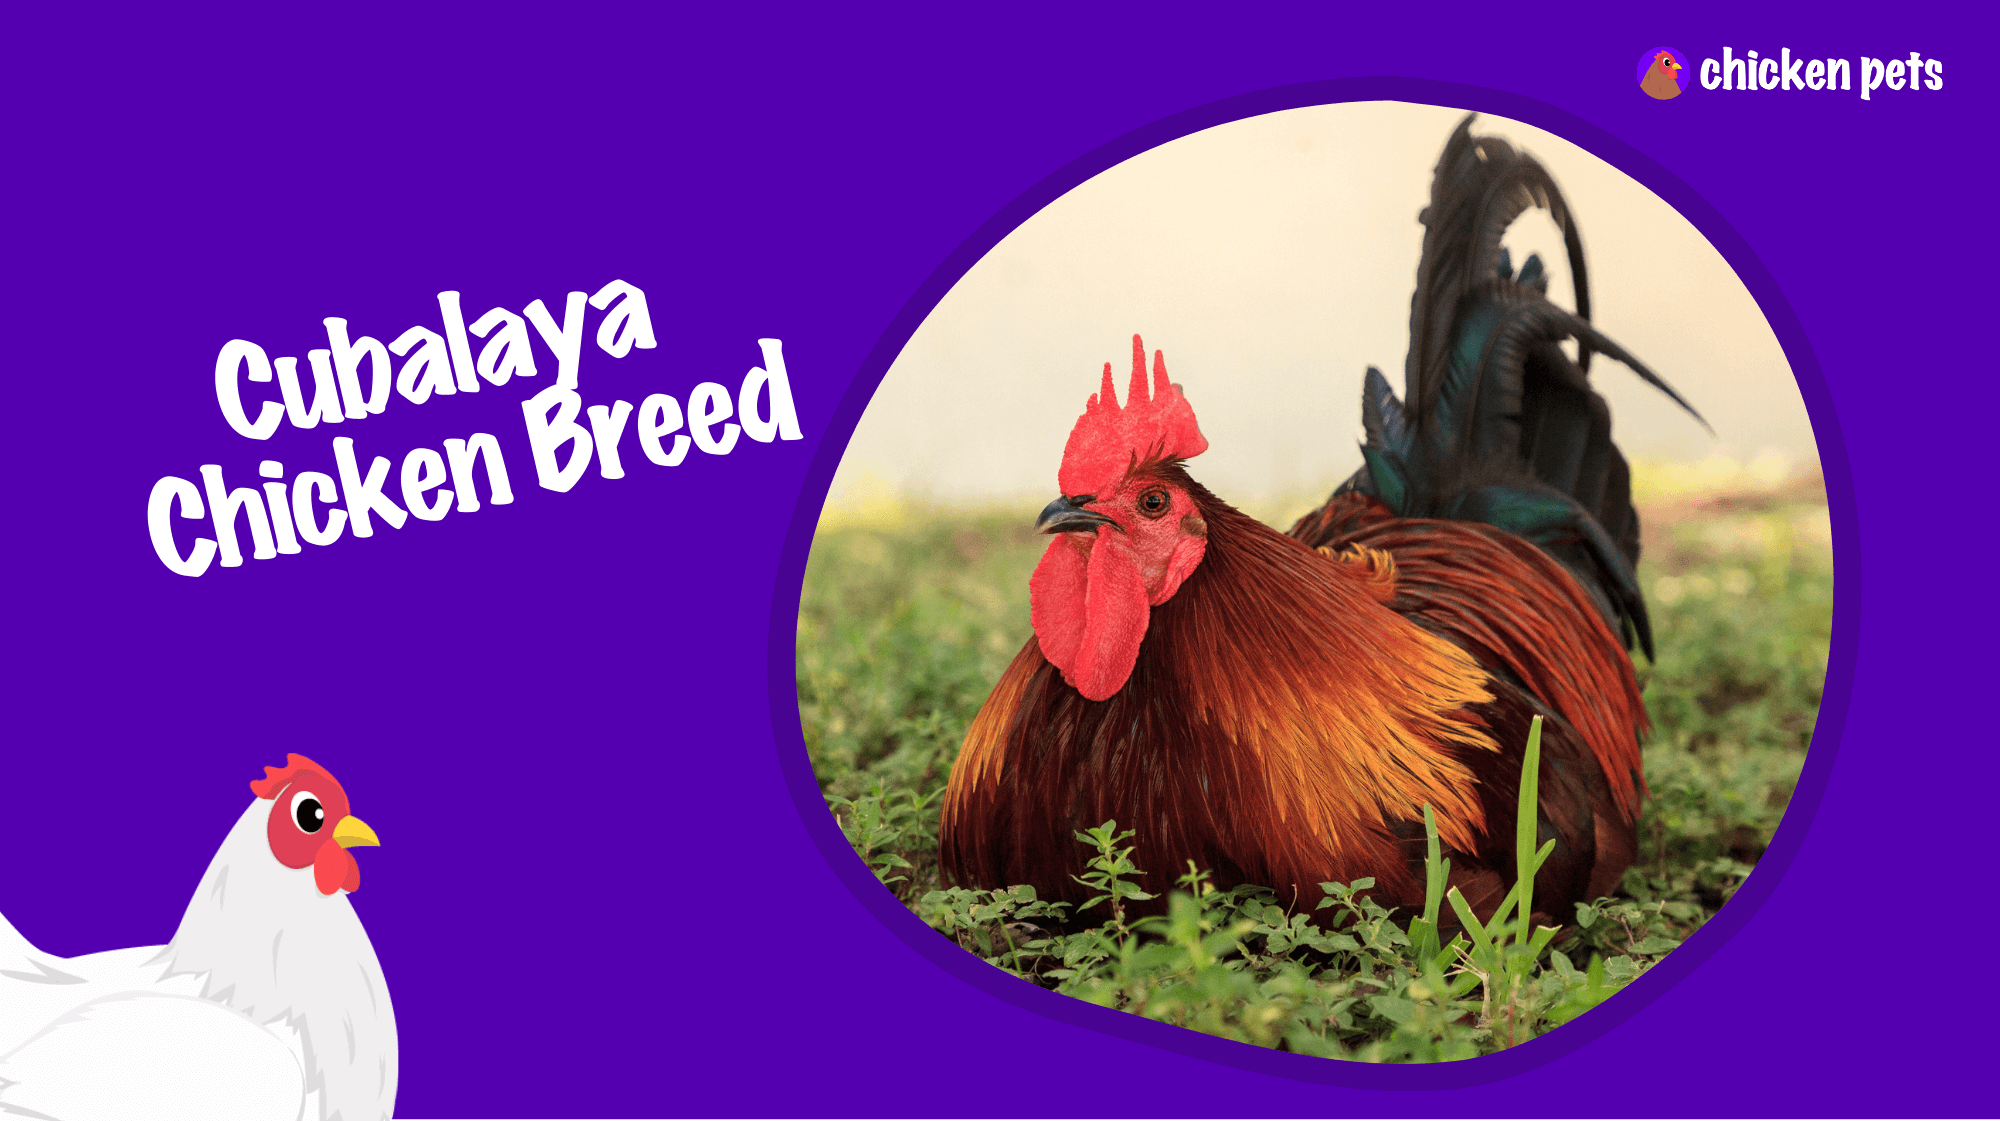 Cubalaya chicken breed